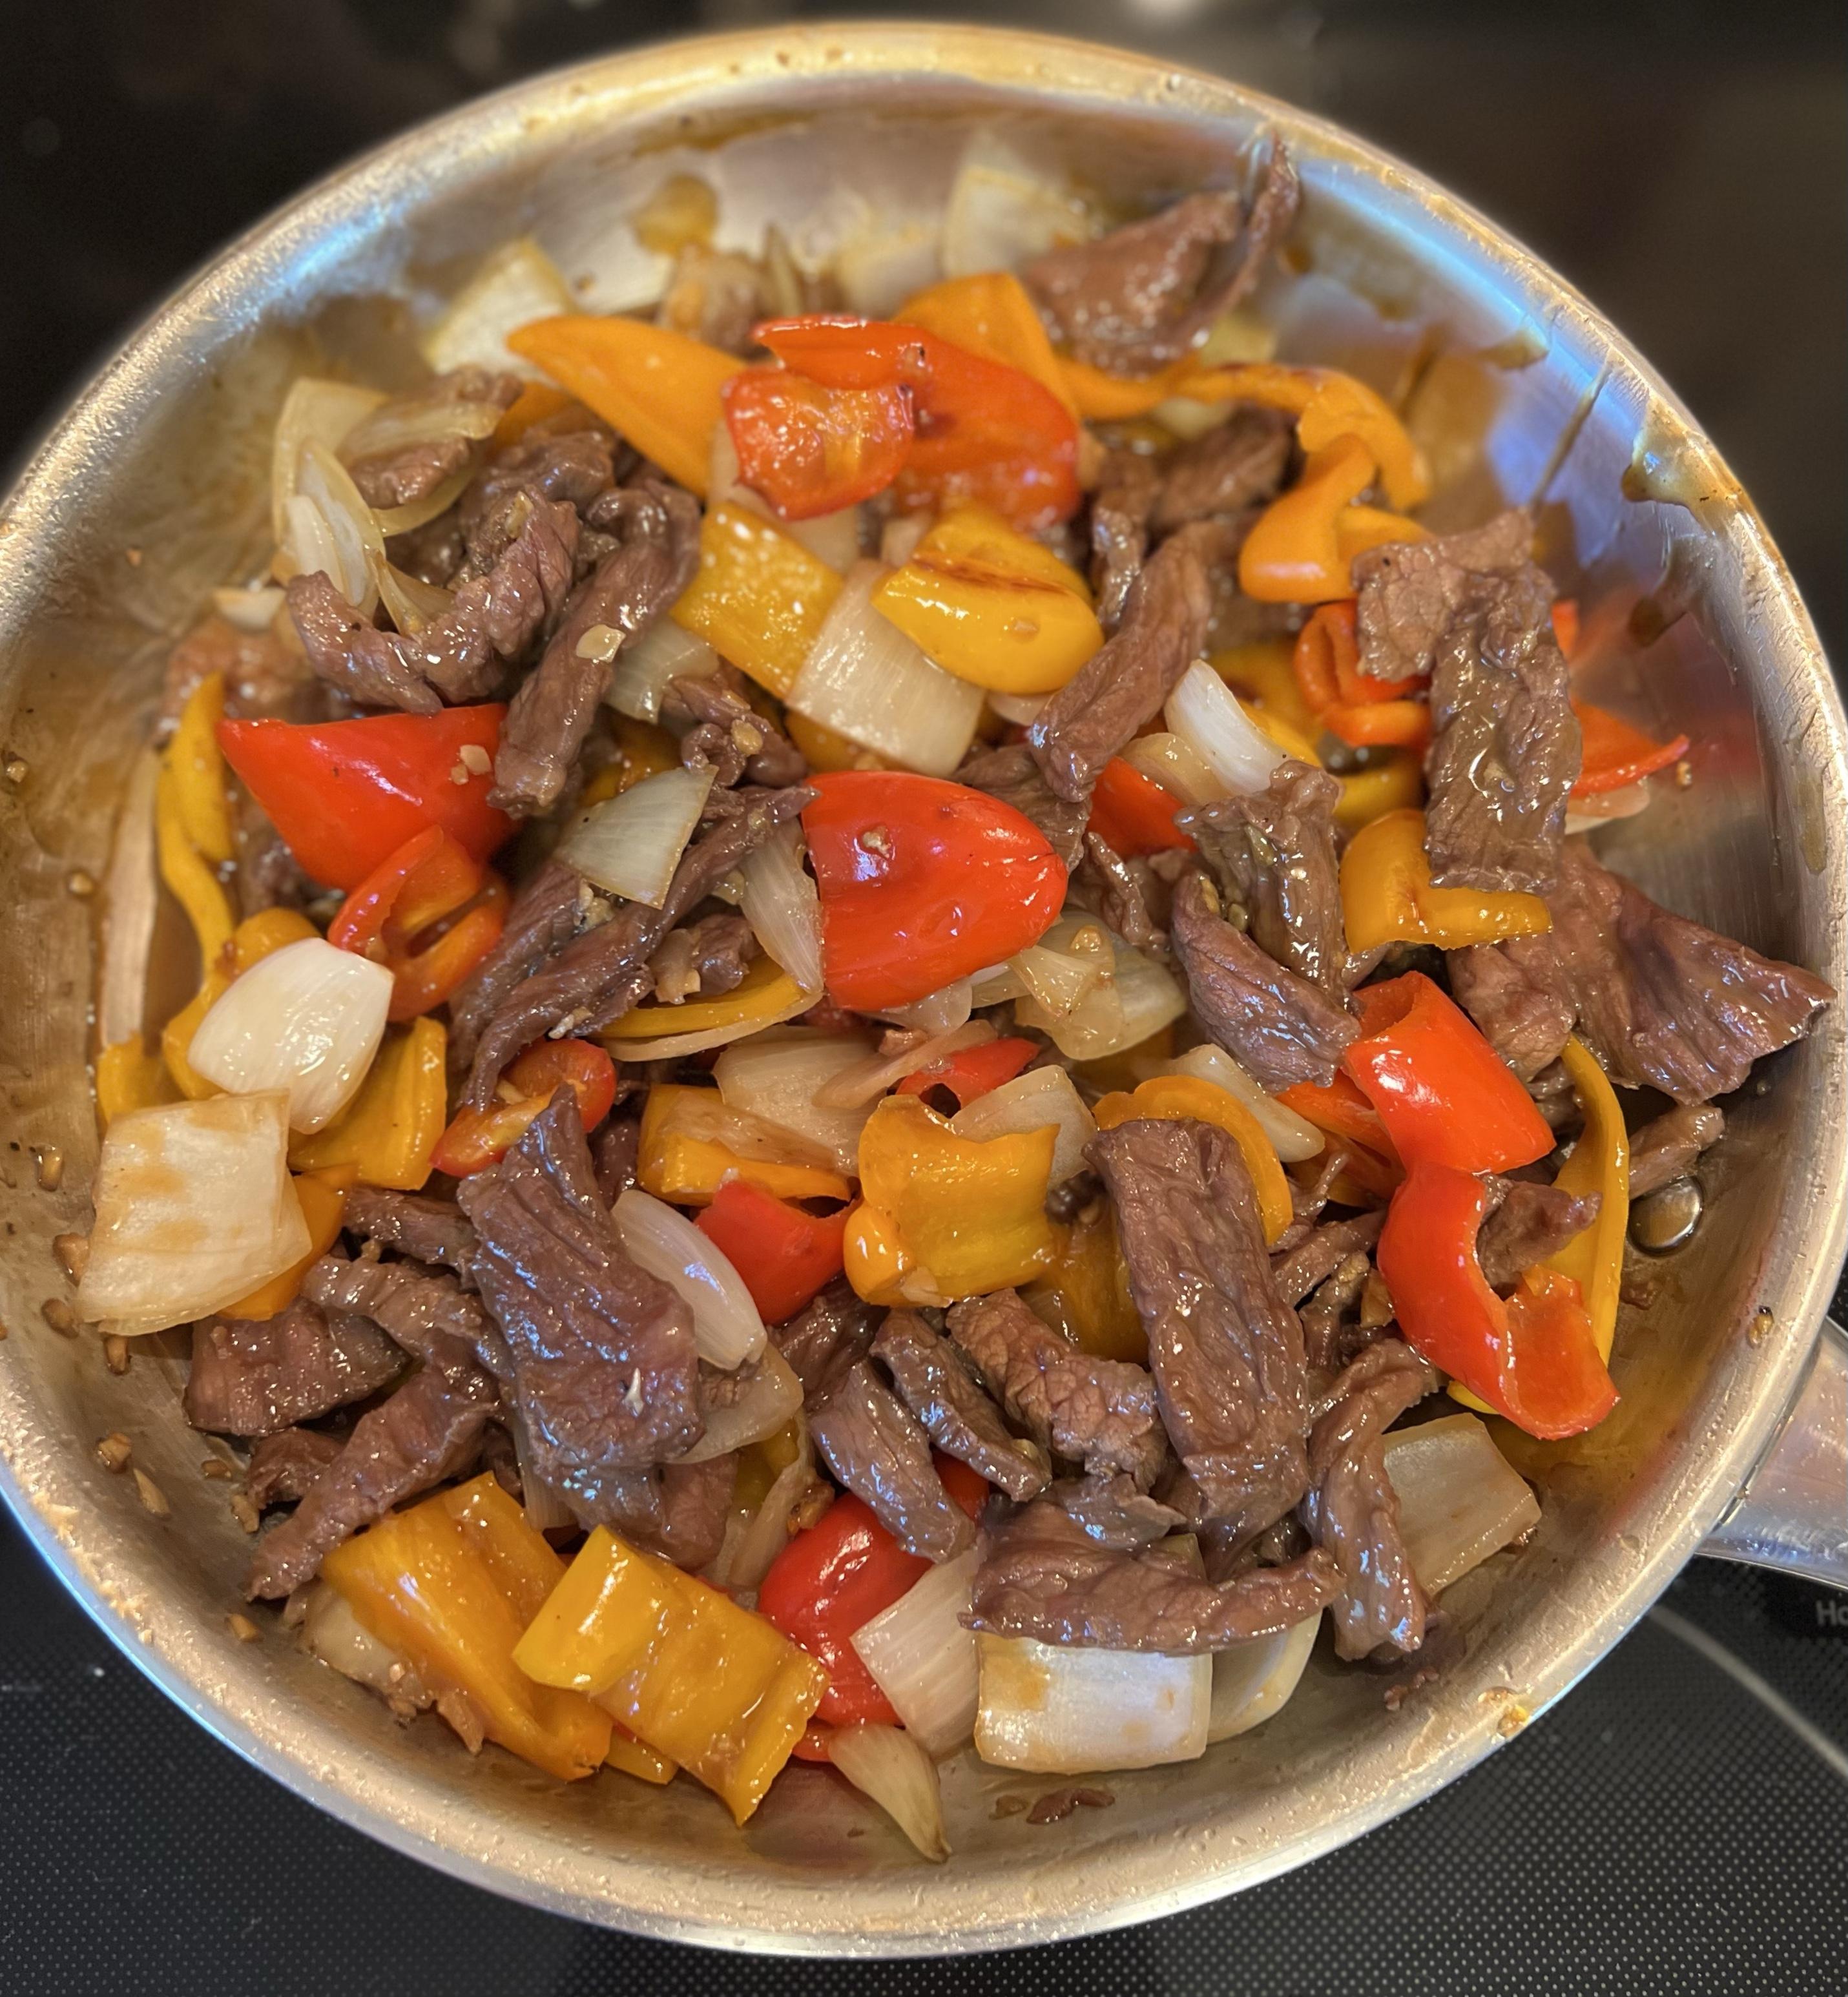 Korean Beef Stir-Fry With A Homemade Asian Sauce